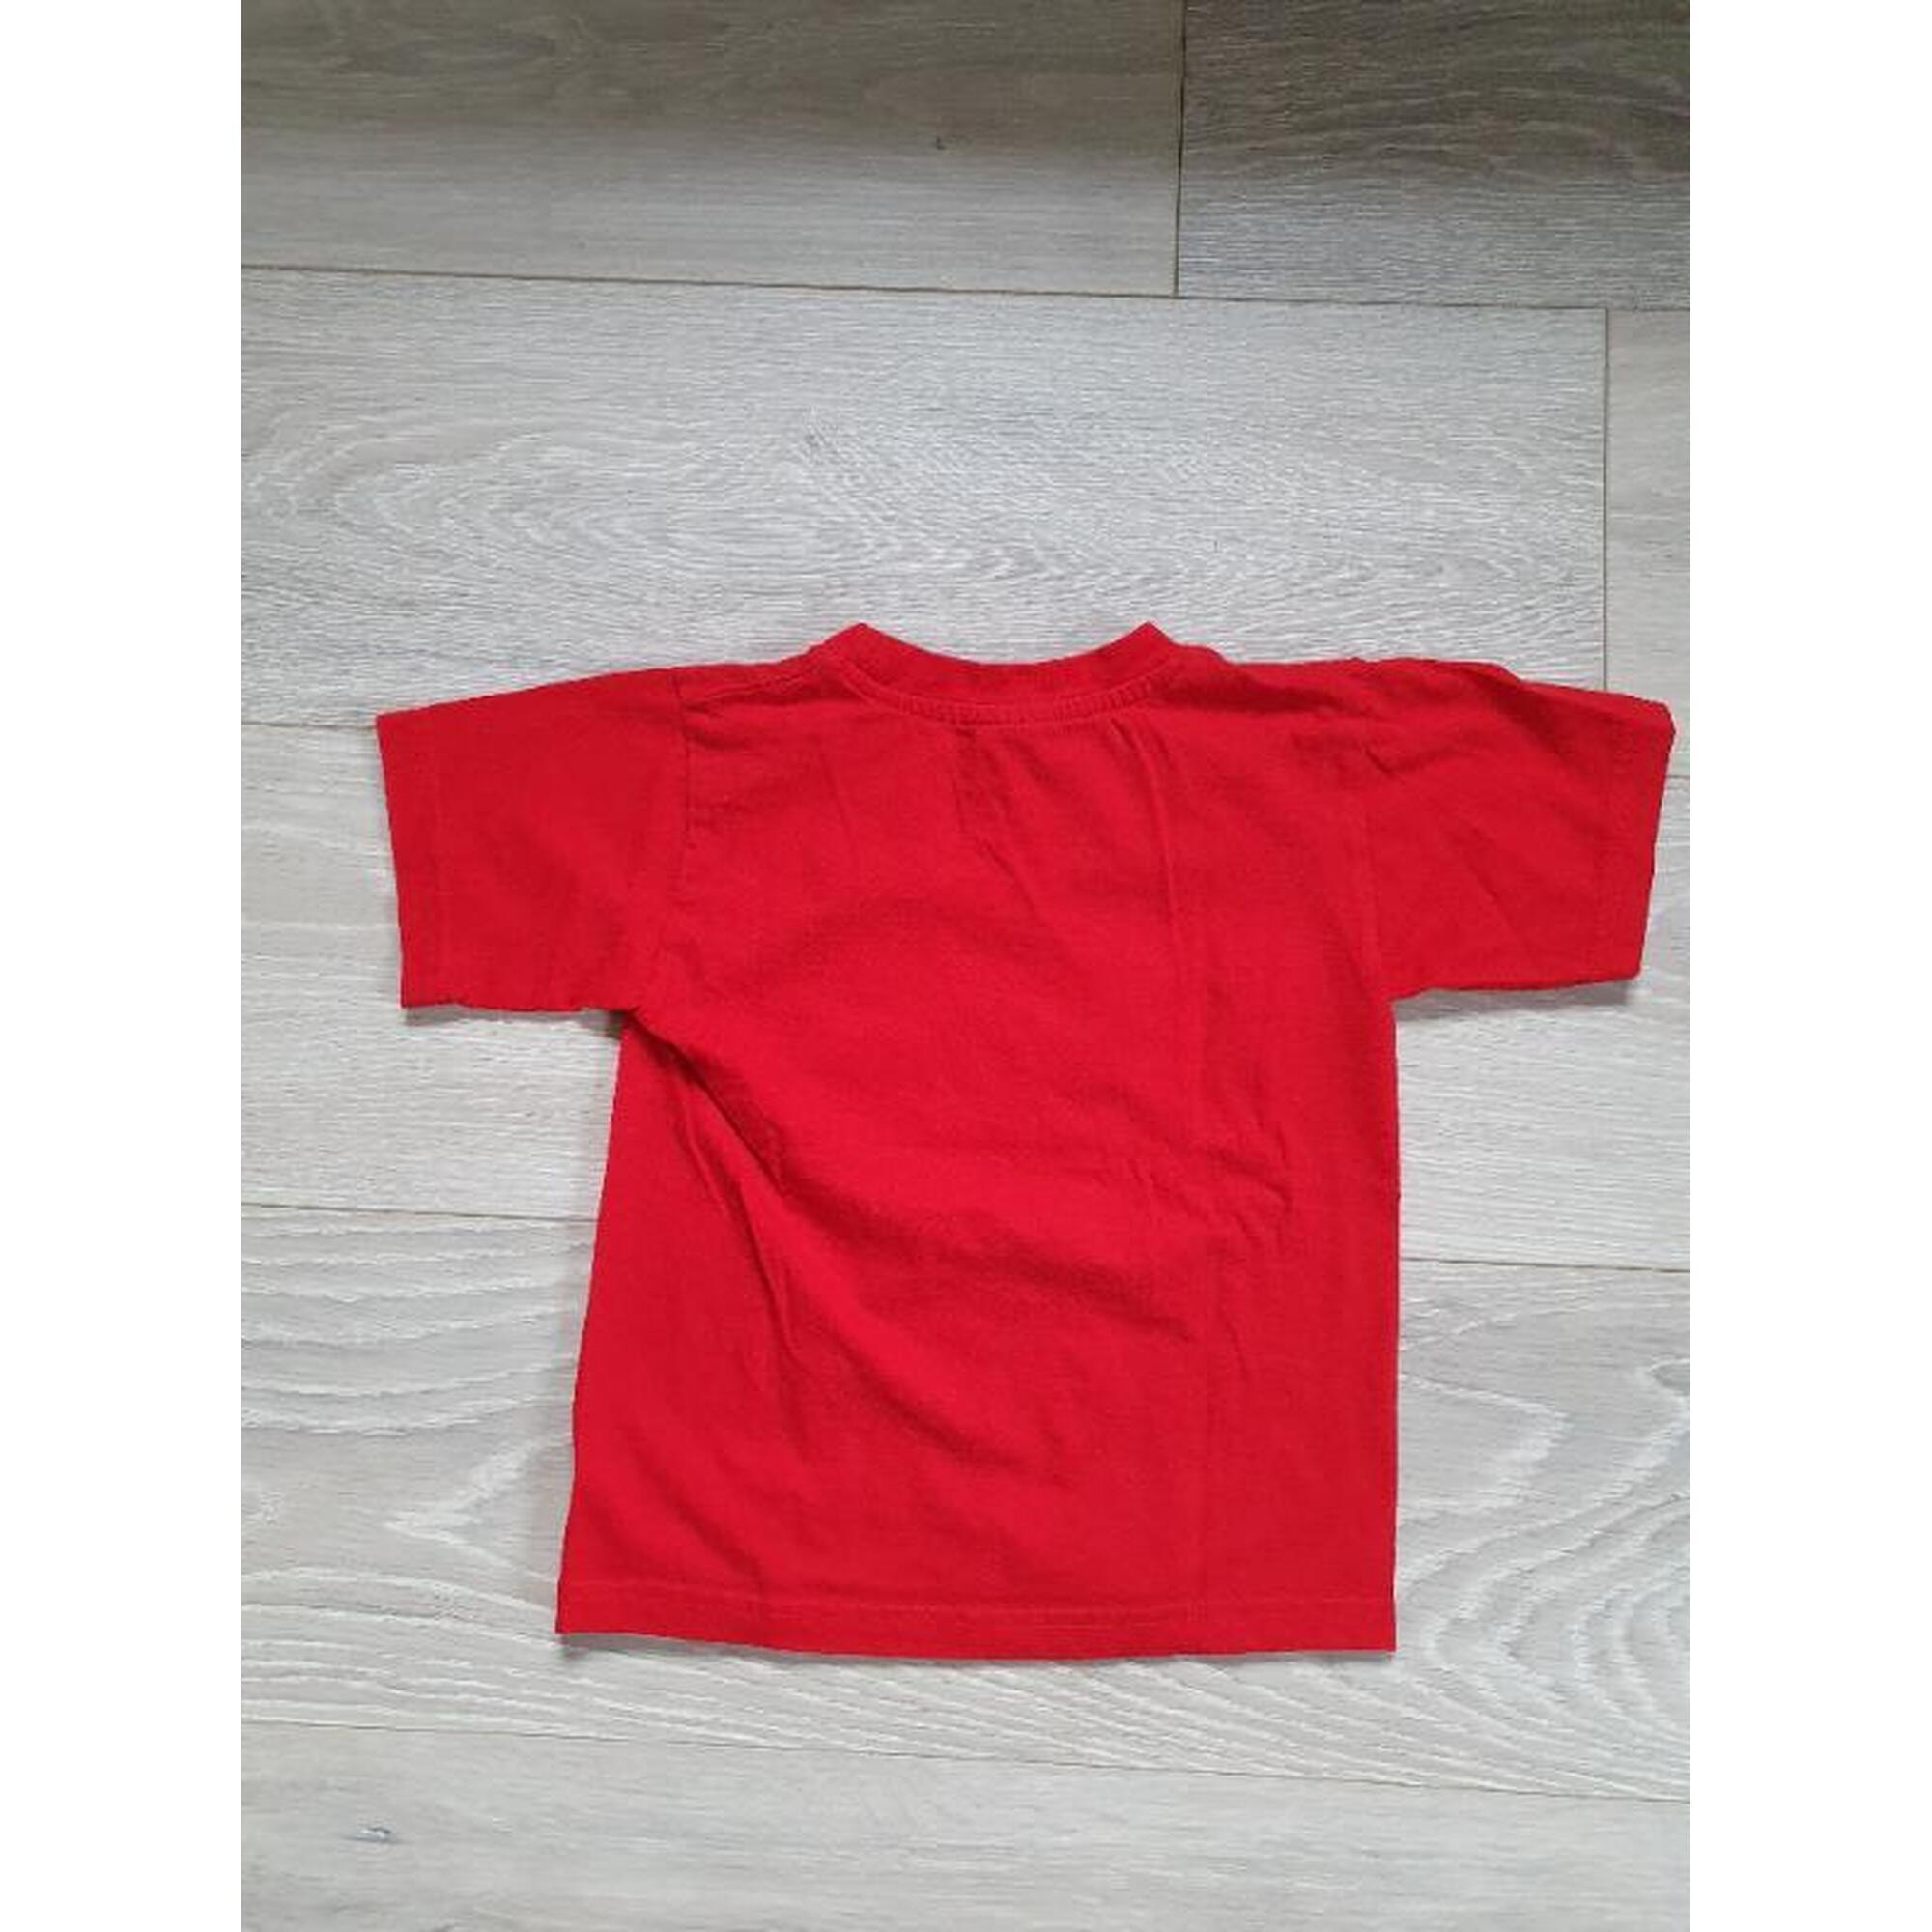 C2C - T-shirt rouge taille 3-4 ans